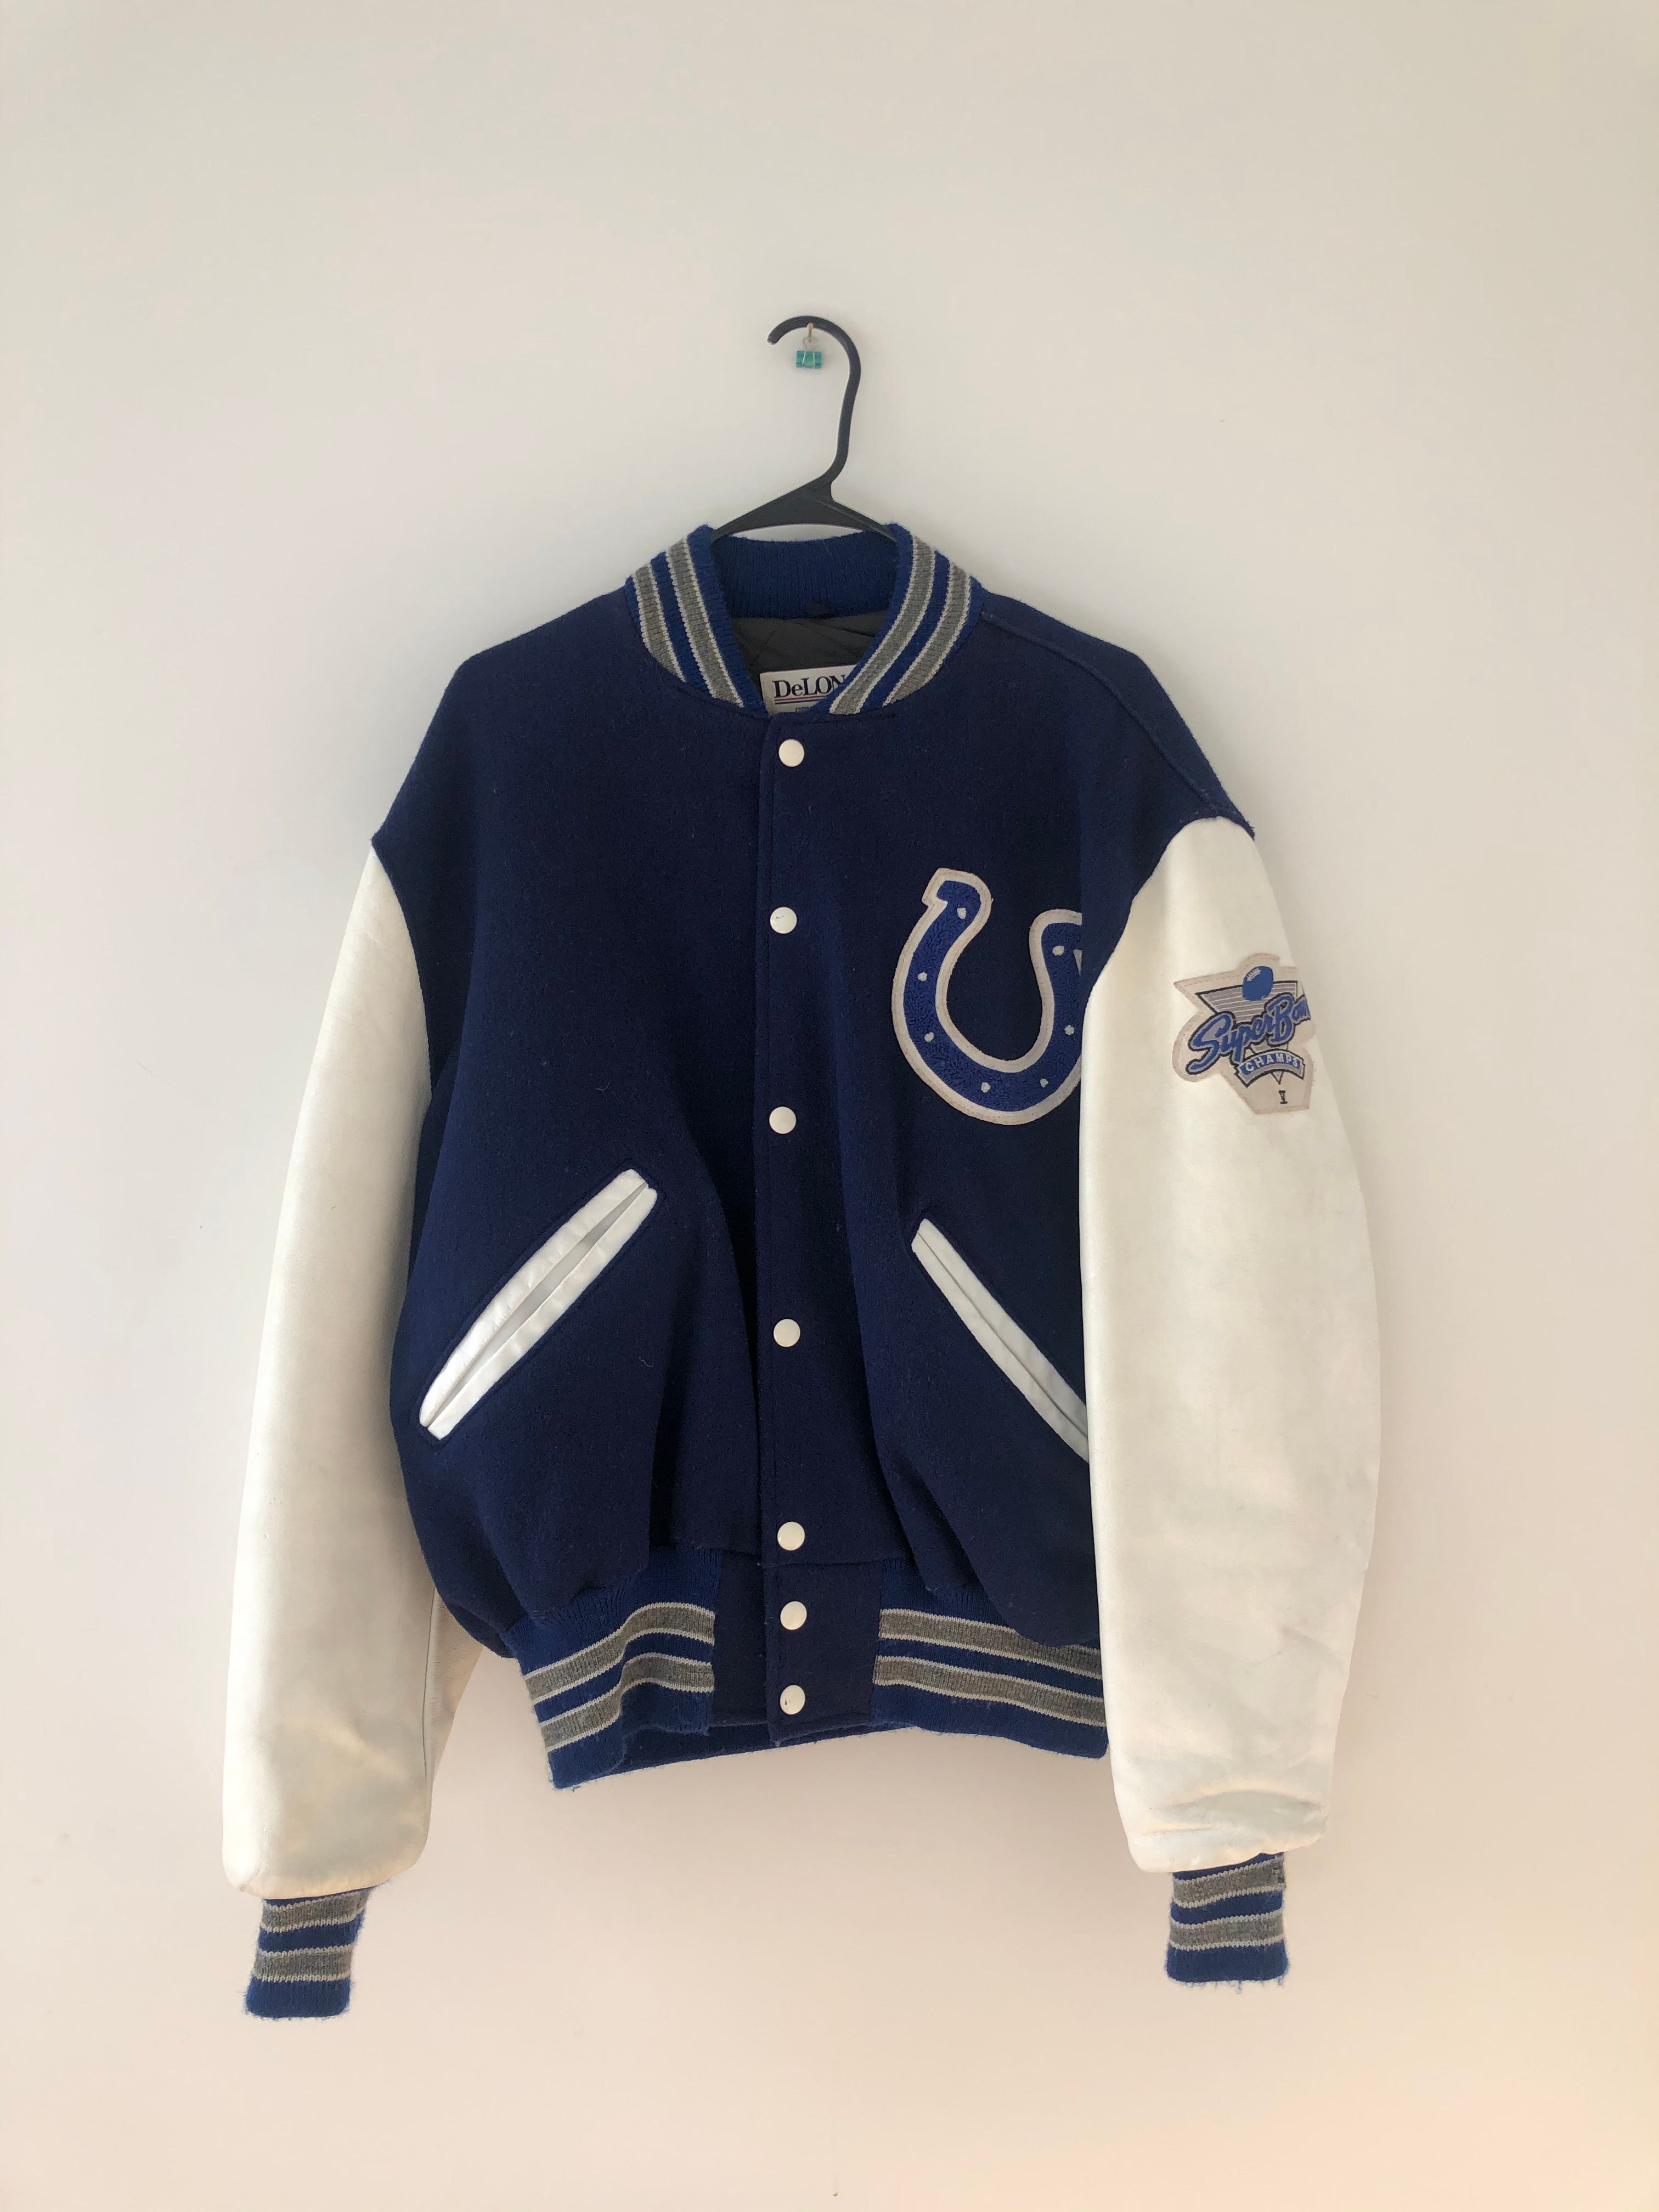 Vintage Indianapolis Colts Authentic 1971 Leather Jacket Size US S / EU 44-46 / 1 - 1 Preview